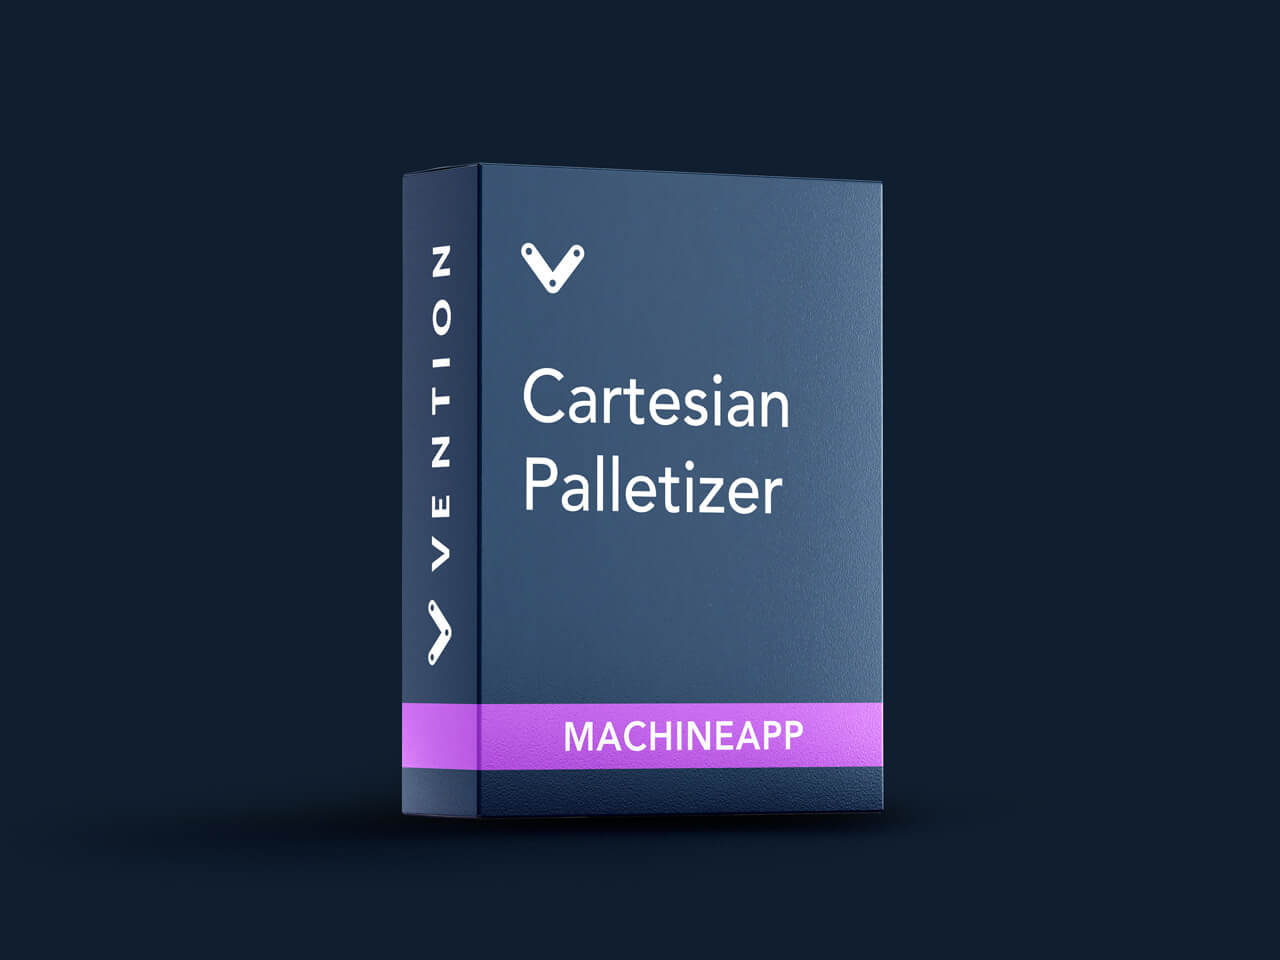 Cartesian Palletizer